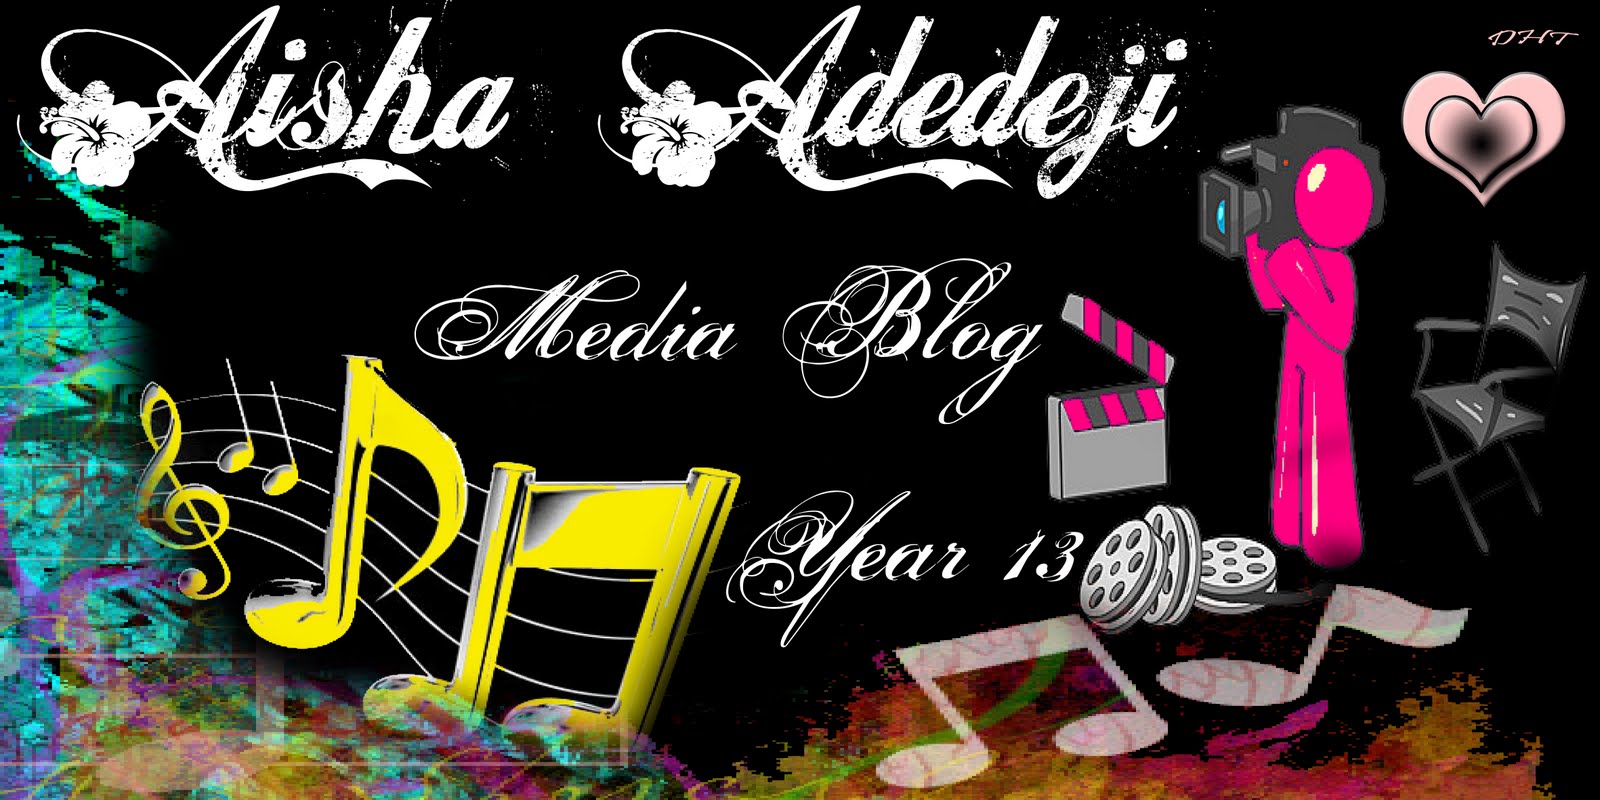 Aisha Year 13 Media Blog